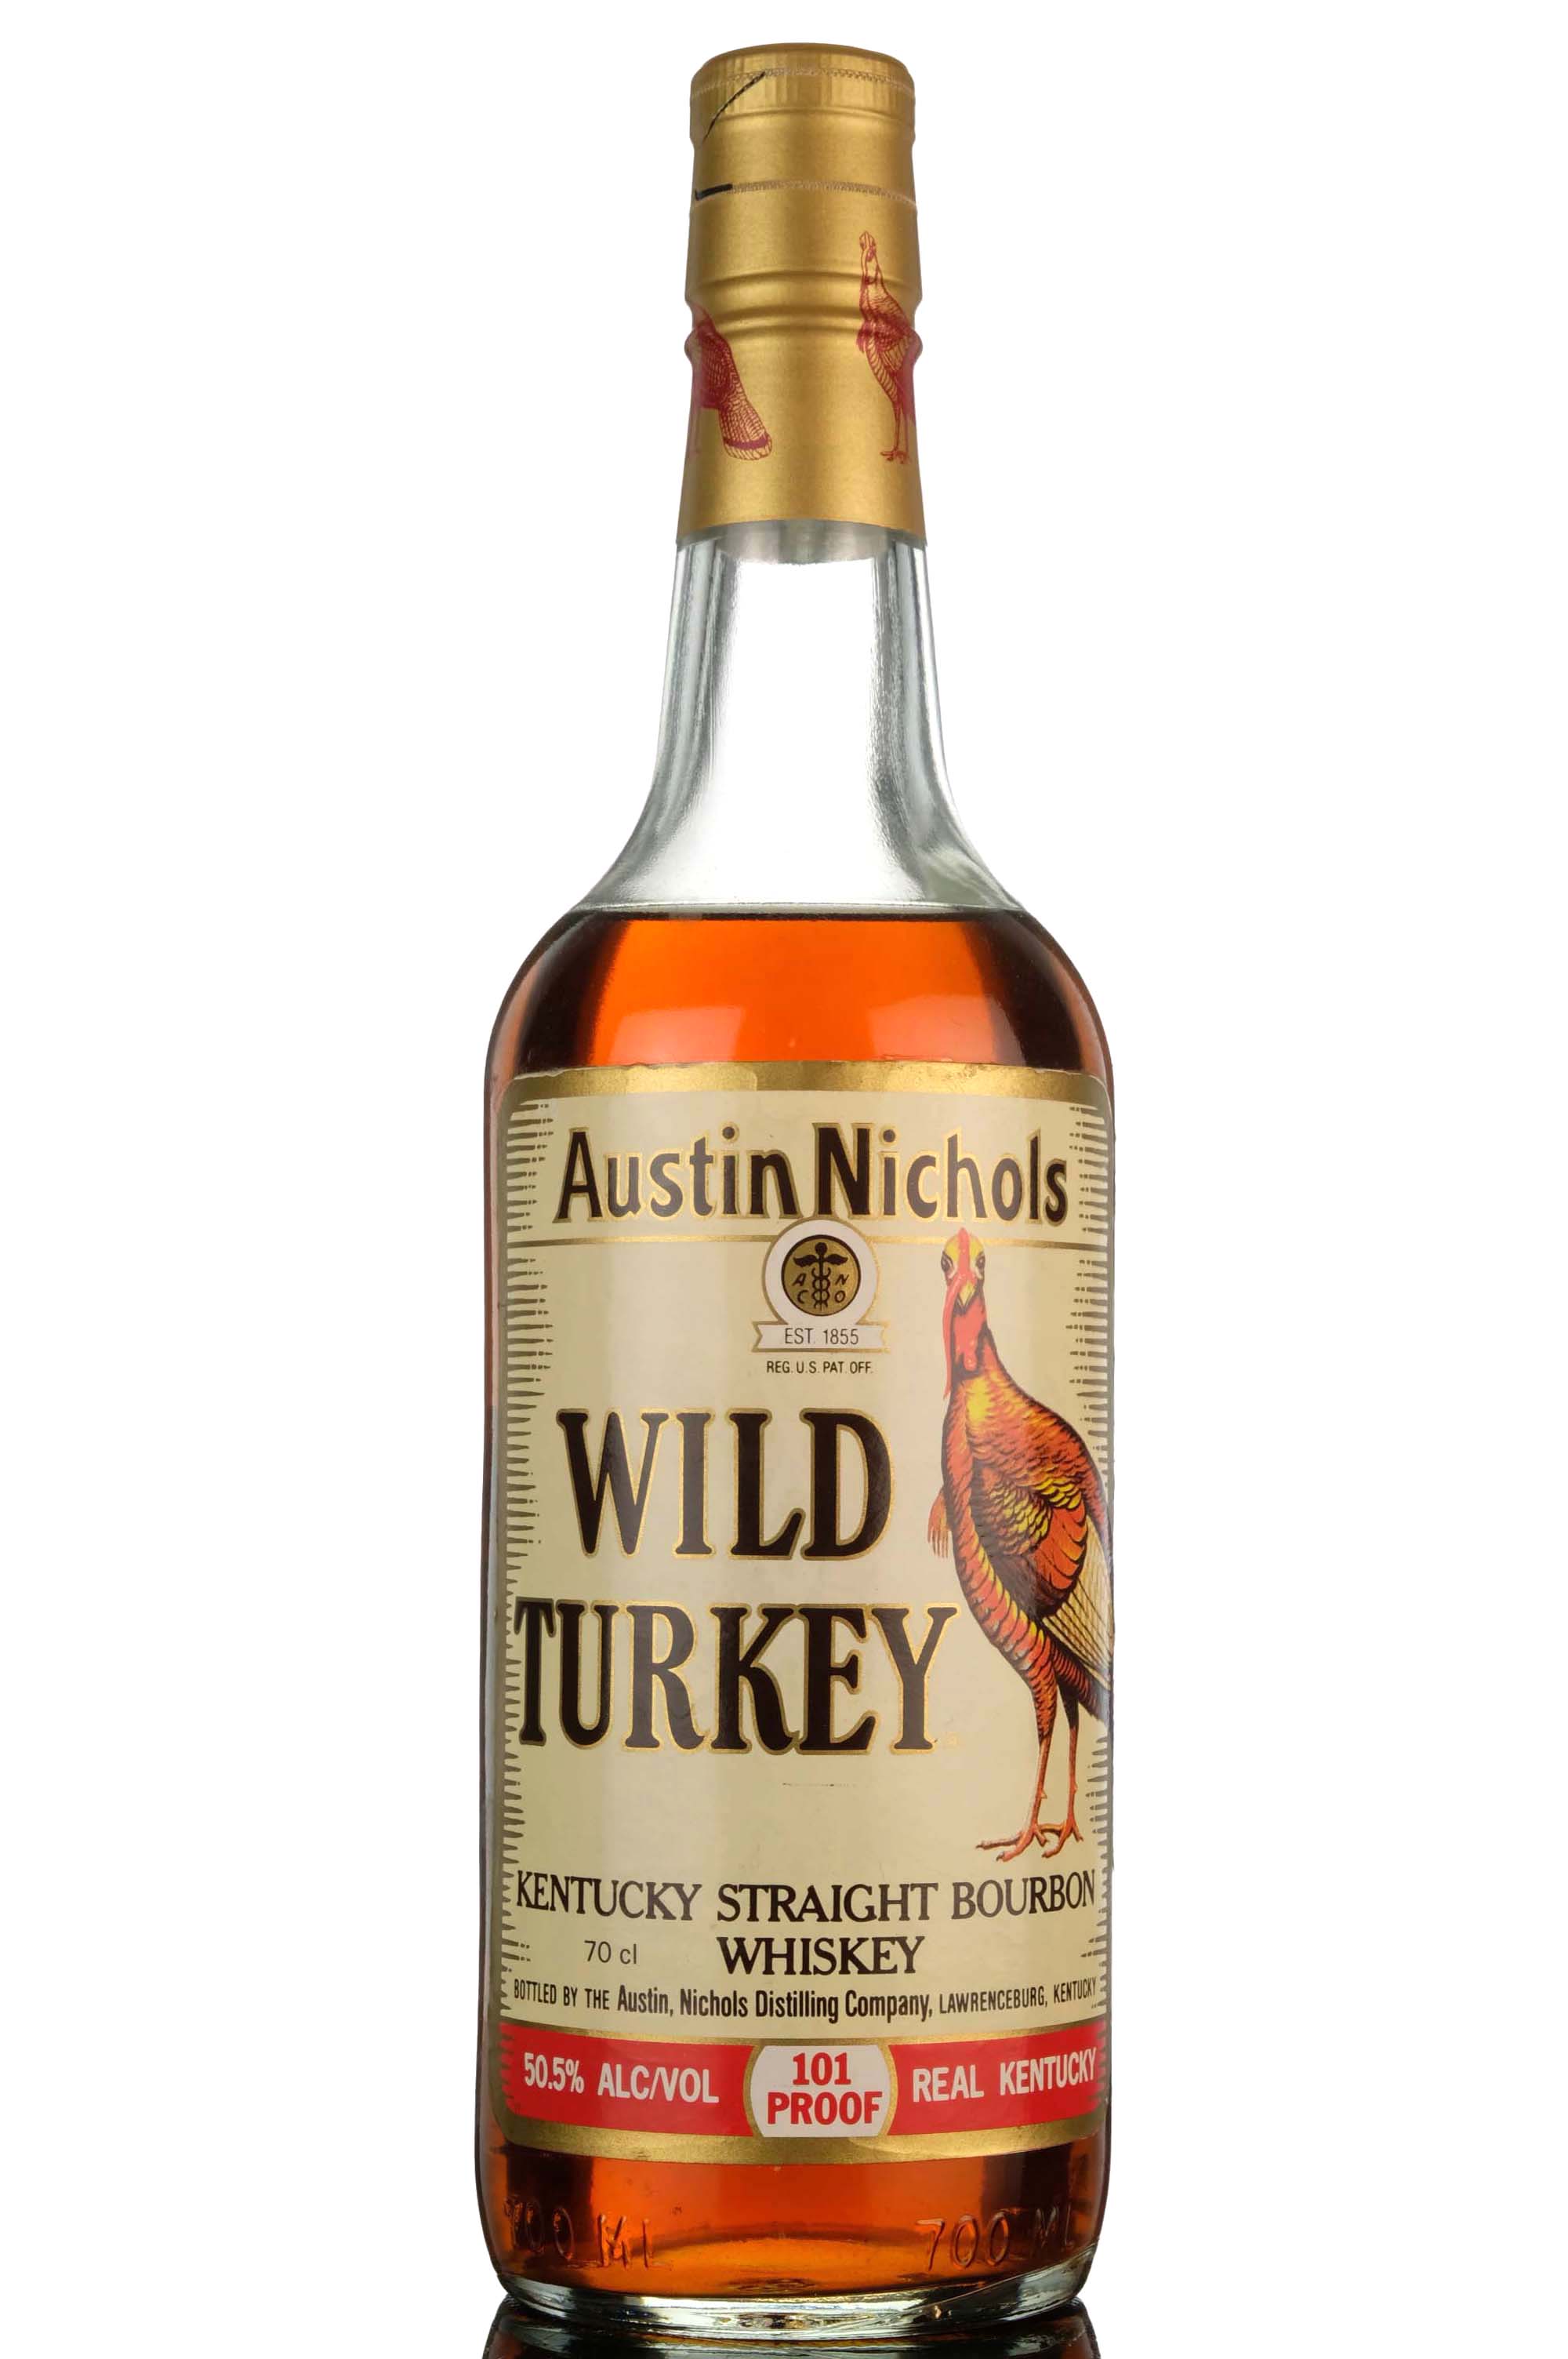 Austin Nichols Wild Turkey - 101 Proof - 1992 Release